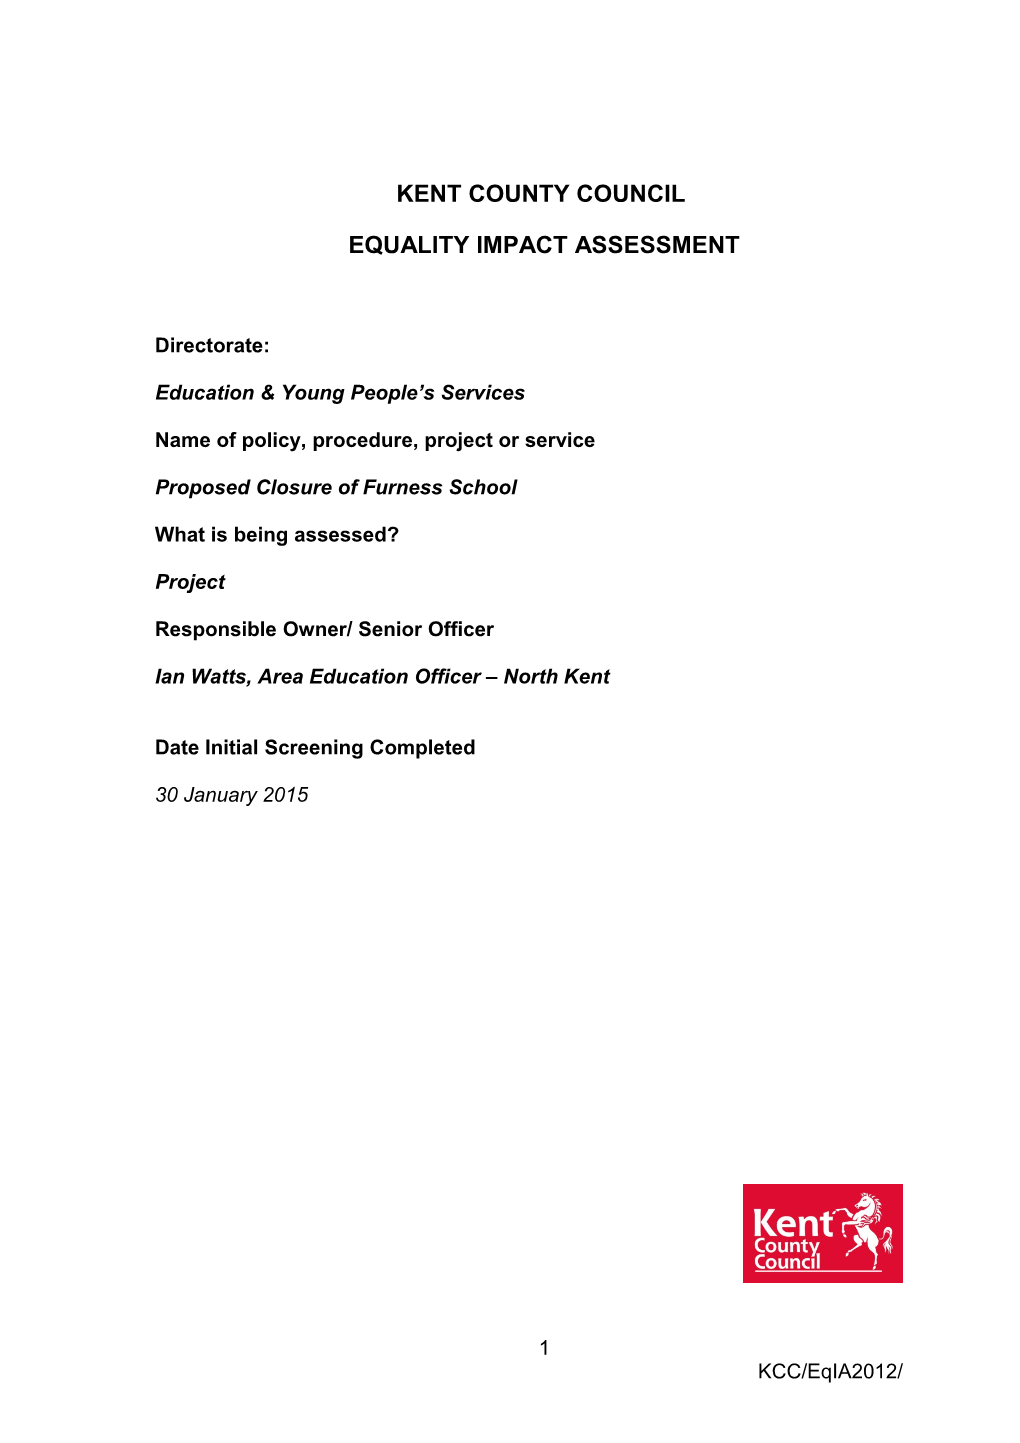 Customer Impact Assessment Report Template s4